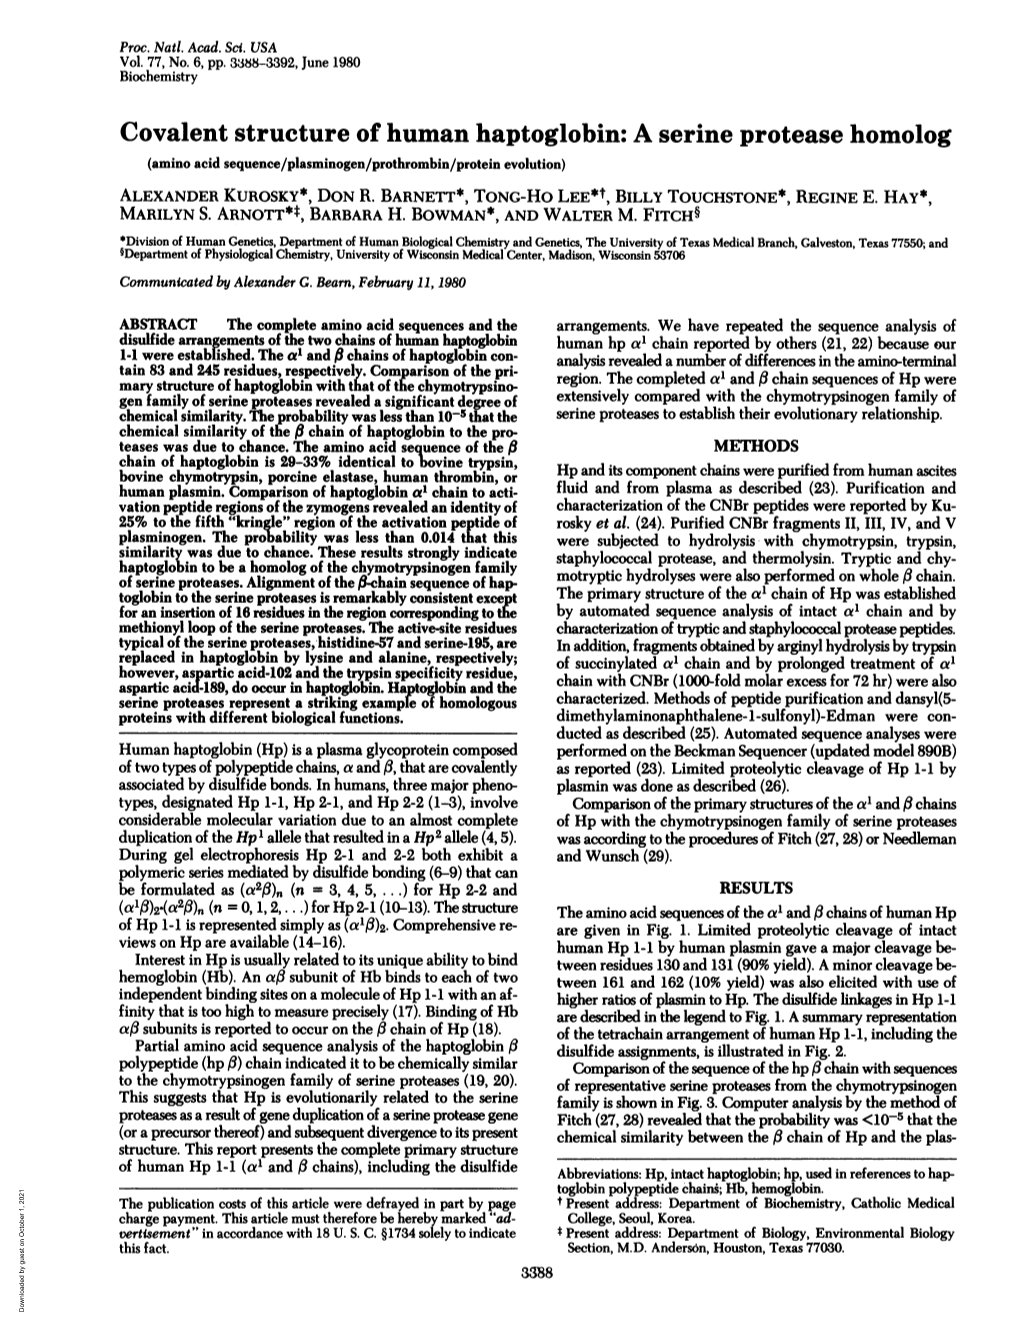 A Serine Protease Homolog (Amino Acid Sequence/Plasminogen/Prothrombin/Protein Evolution) ALEXANDER KUROSKY*, DON R